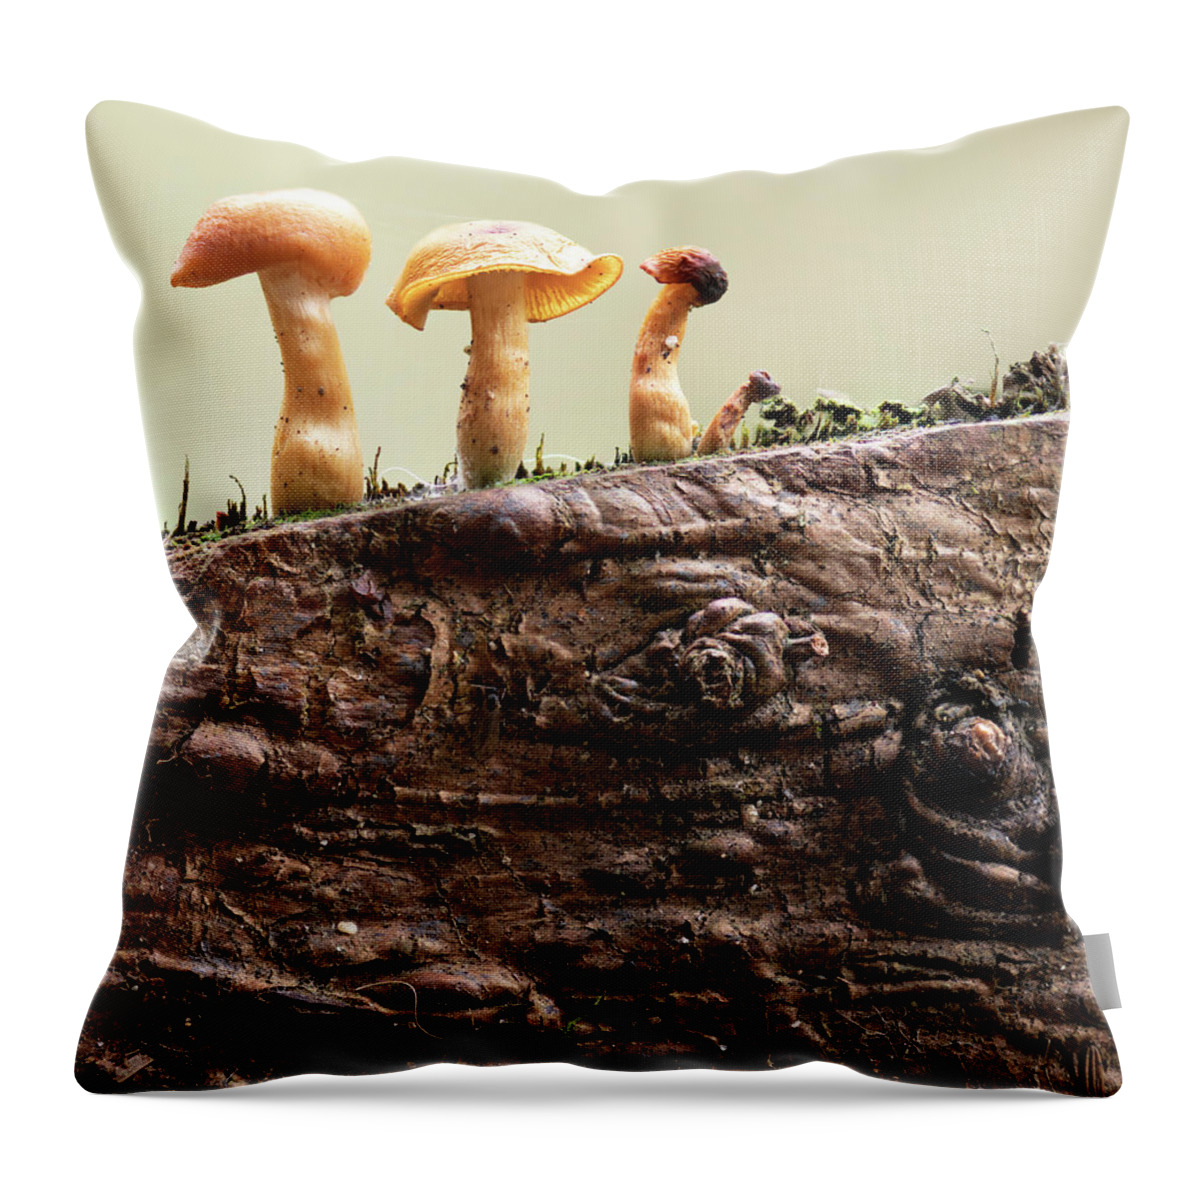 Mushrooms Throw Pillow featuring the photograph Three Generations by Bob VonDrachek